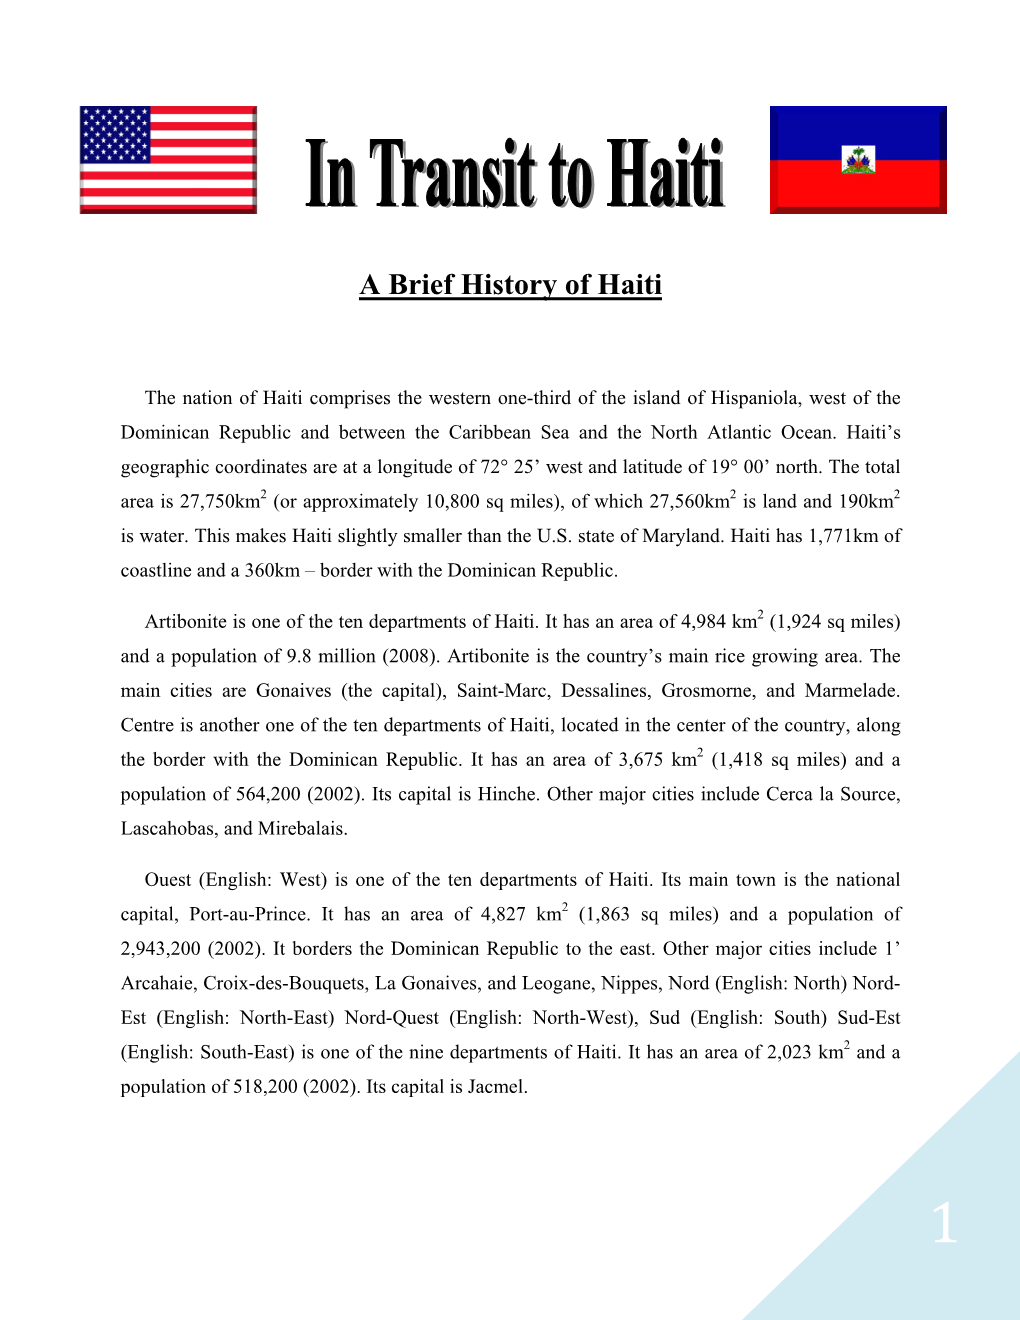 A Brief History of Haiti